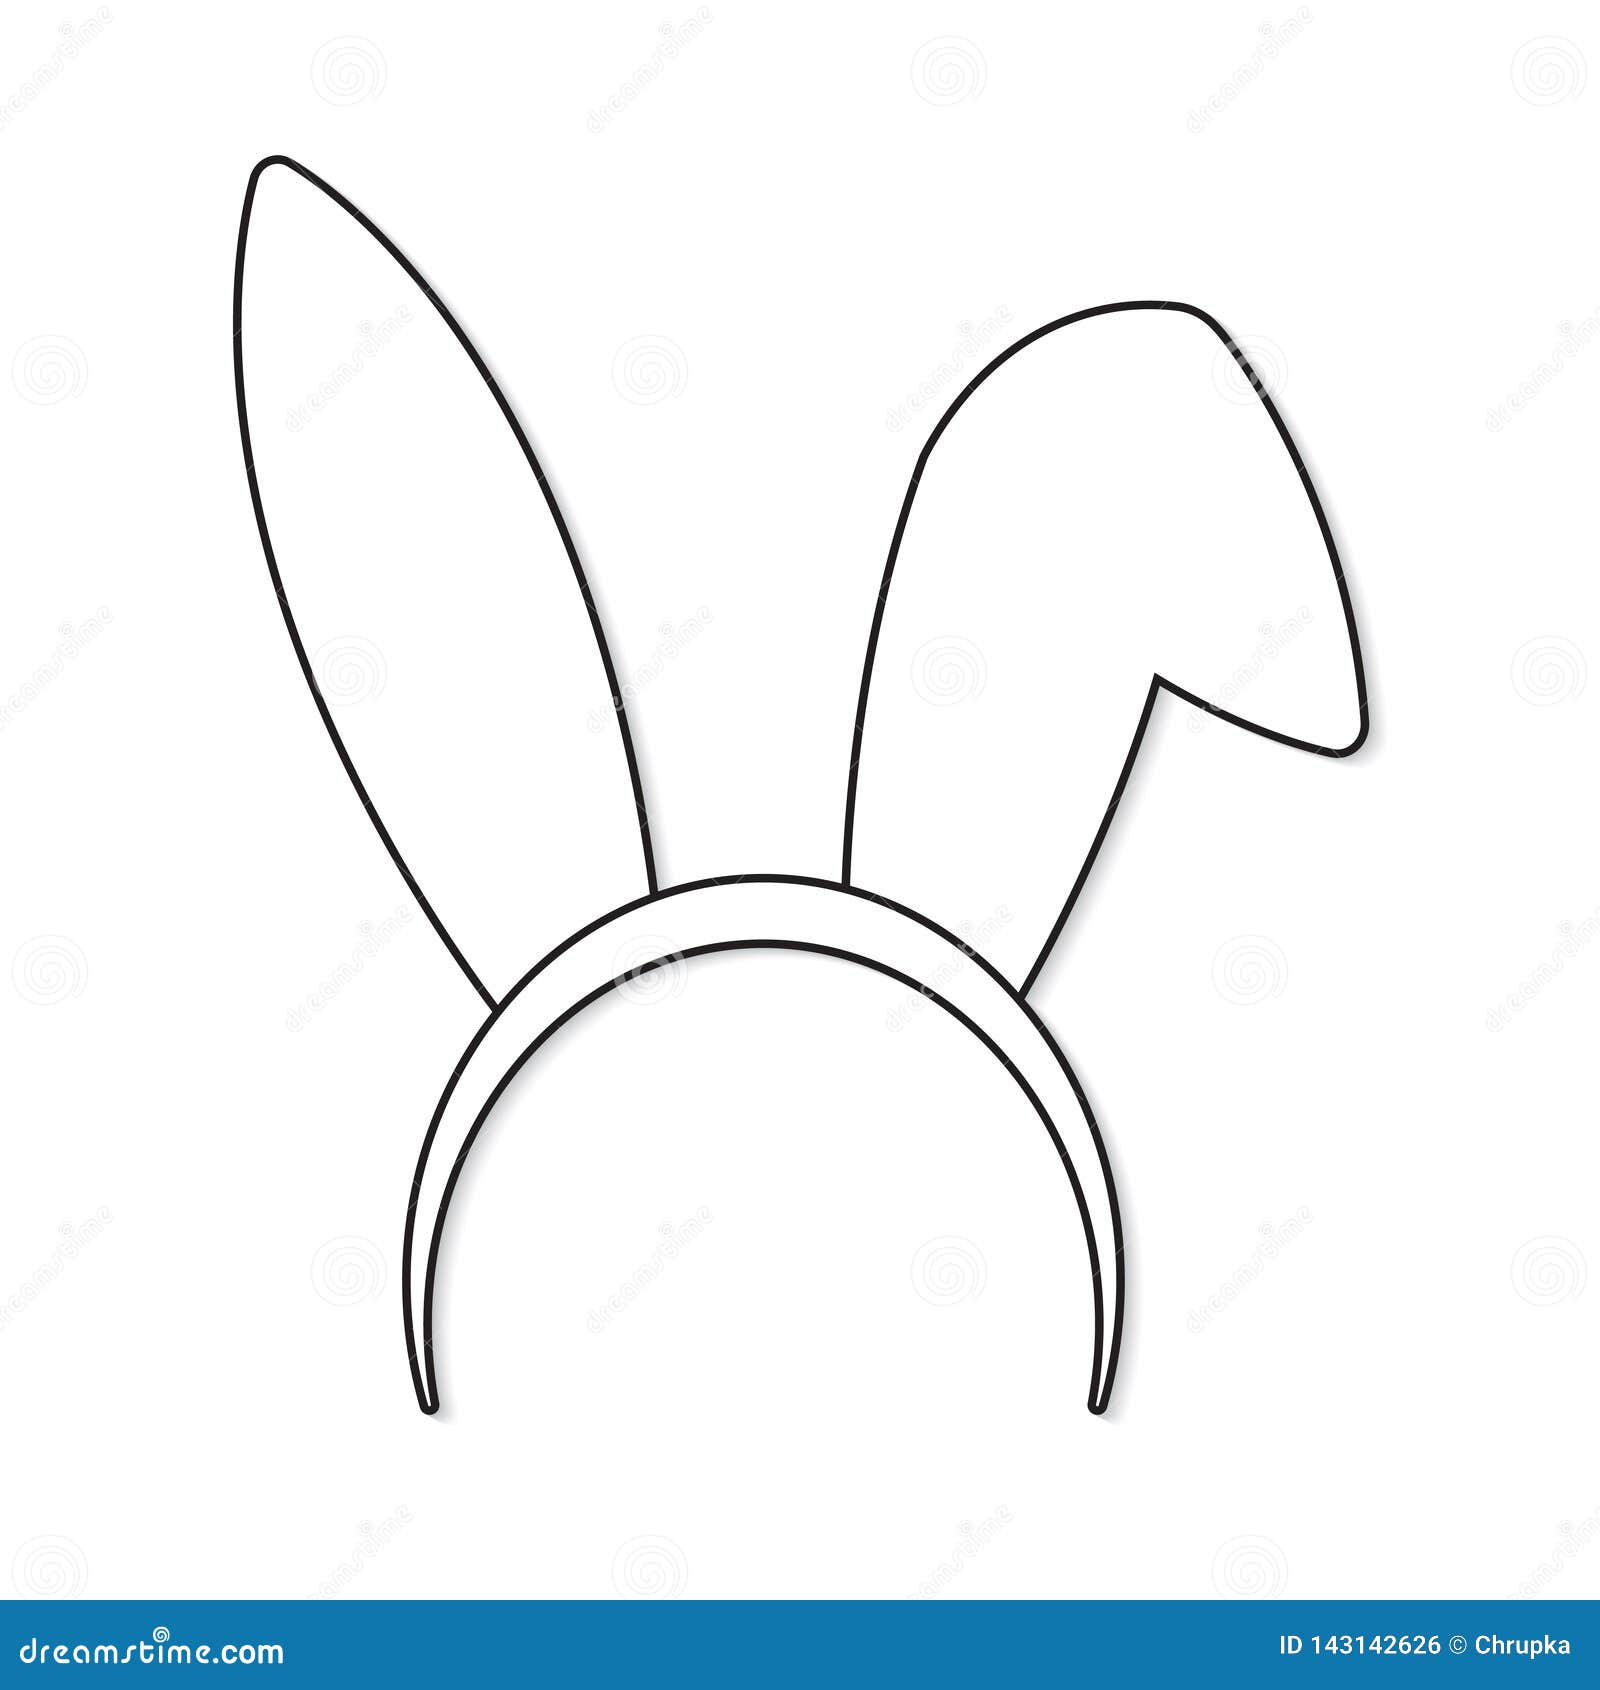 Bunny ears headband stock vector. Illustration of cute - 143142626